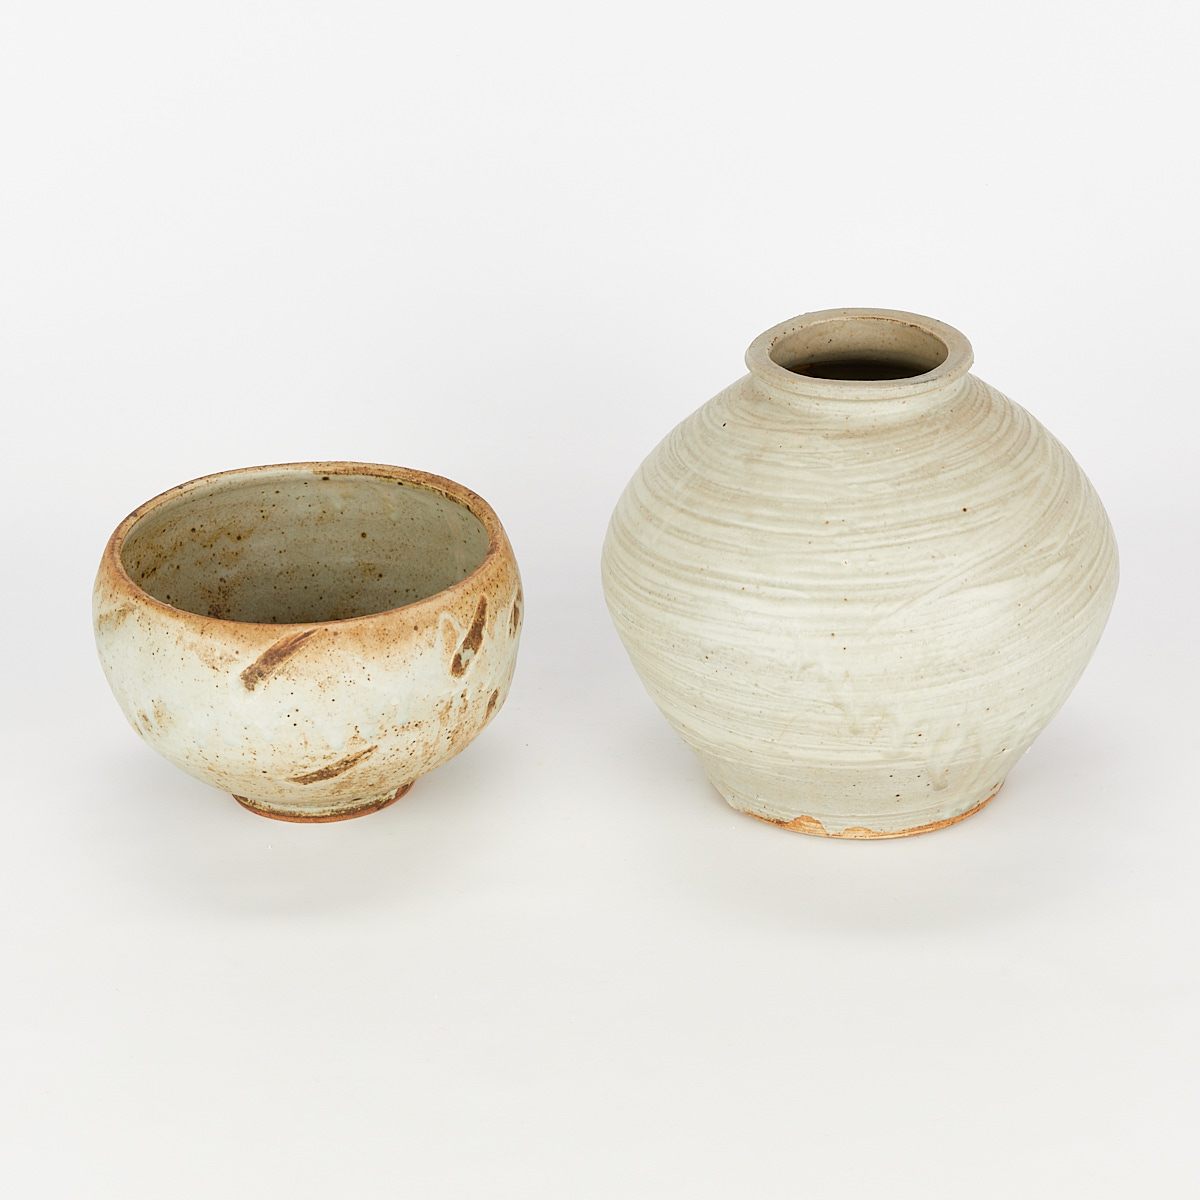 2 Studio Ceramic Vessels - Wayne Branum - Image 6 of 10